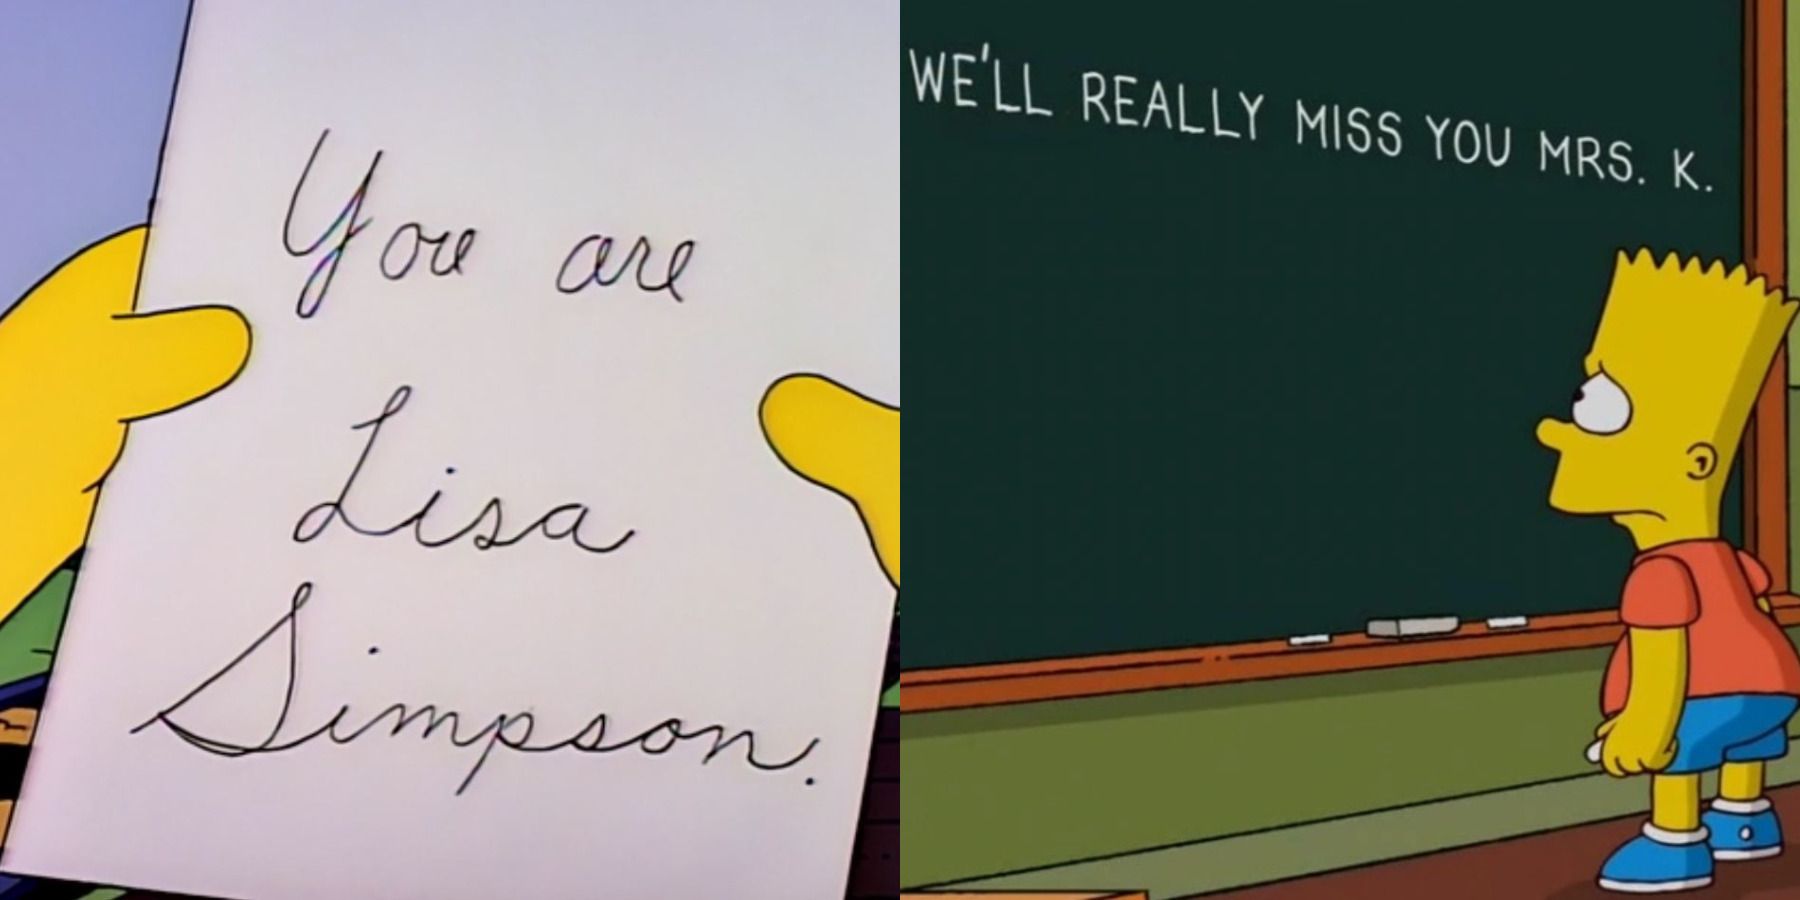 Category:Sad episodes, Simpsons Wiki